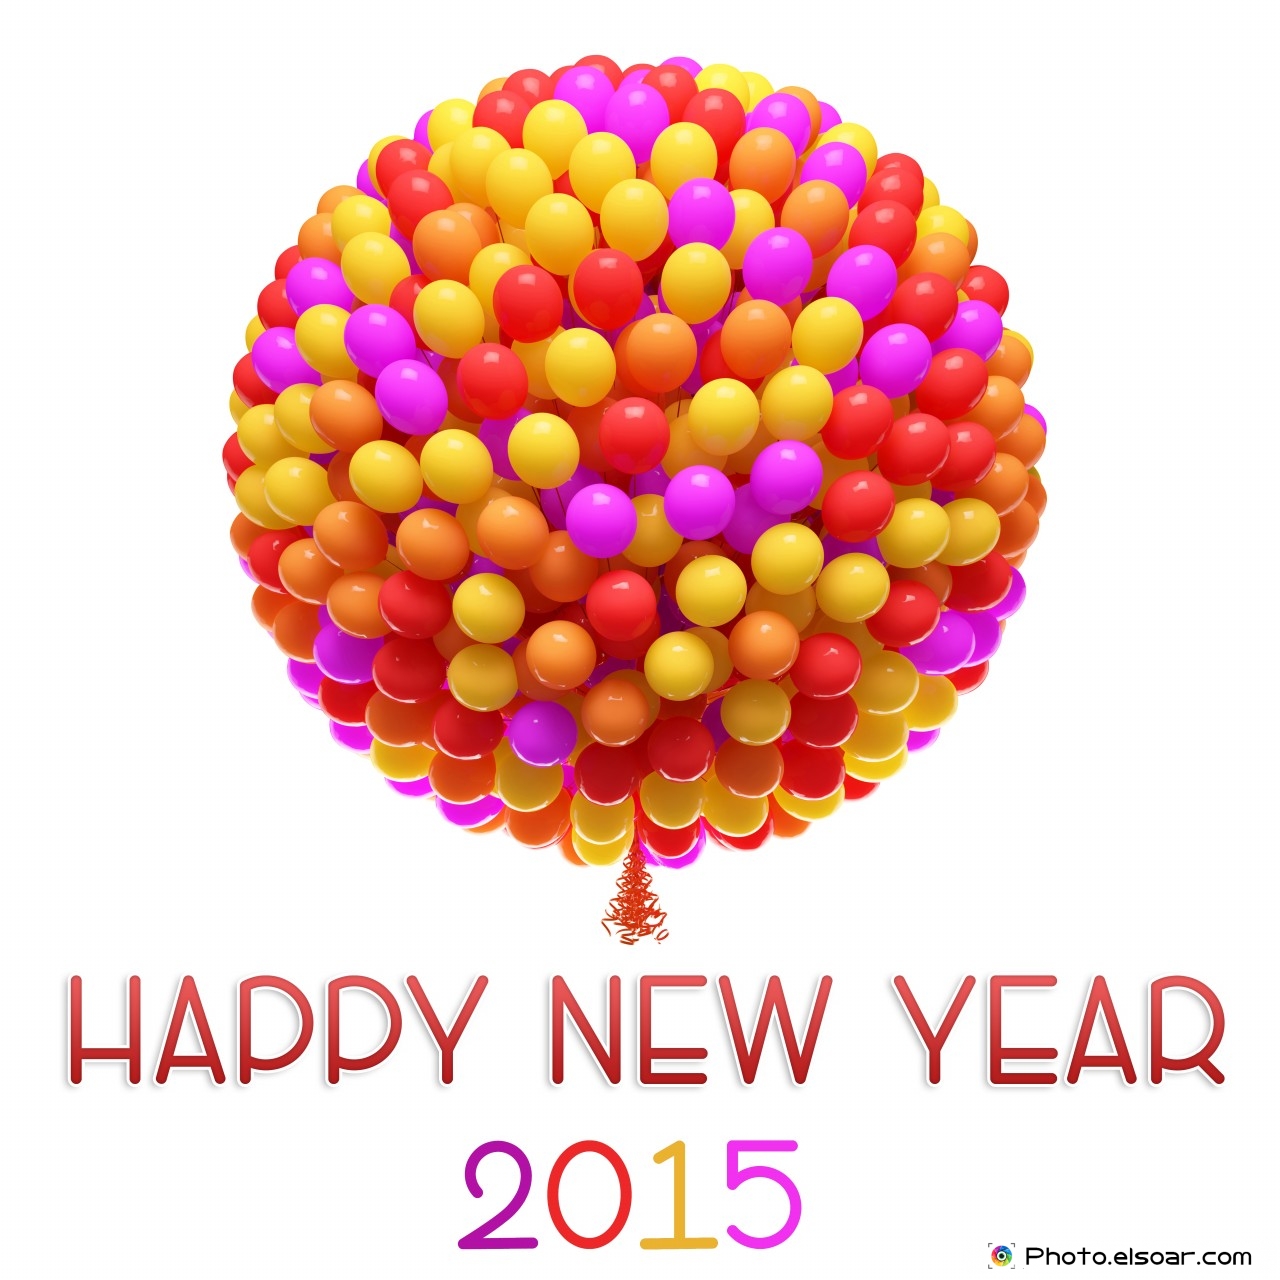 Happy New Year Desktop Wallpaper HD Image Of